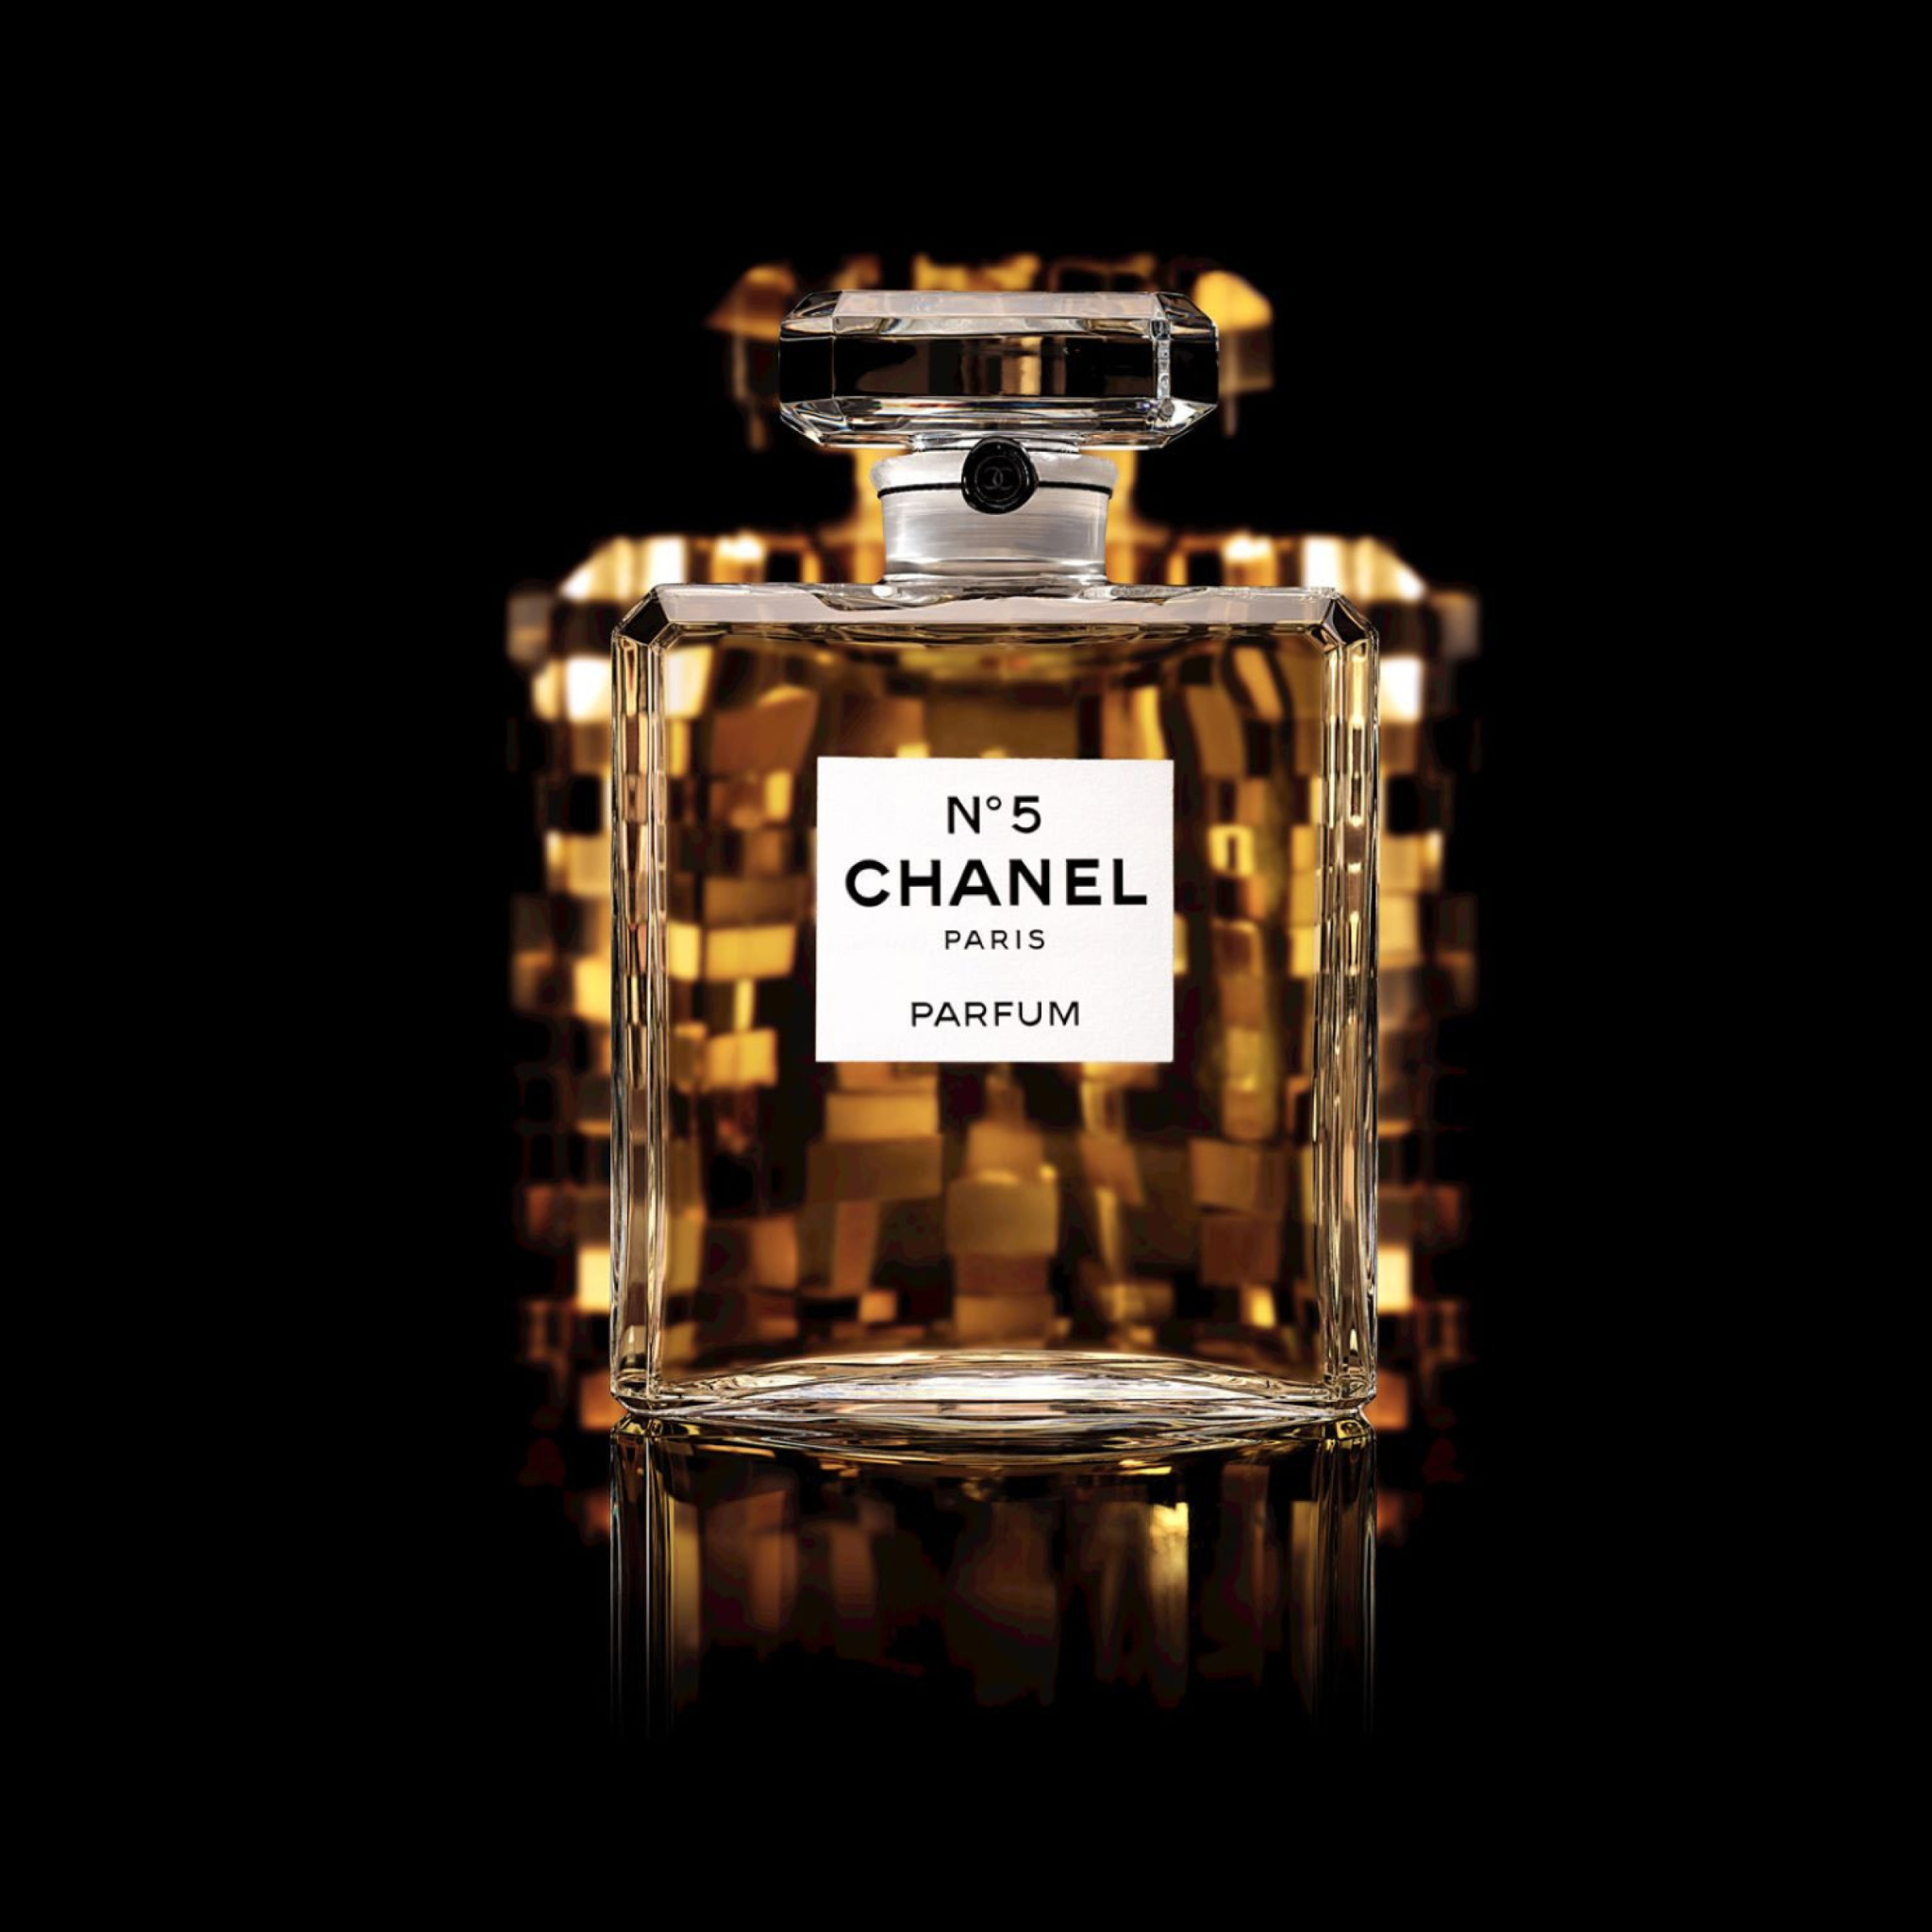 Das Chanel 5 Fragrance Perfume Wallpaper 2048x2048